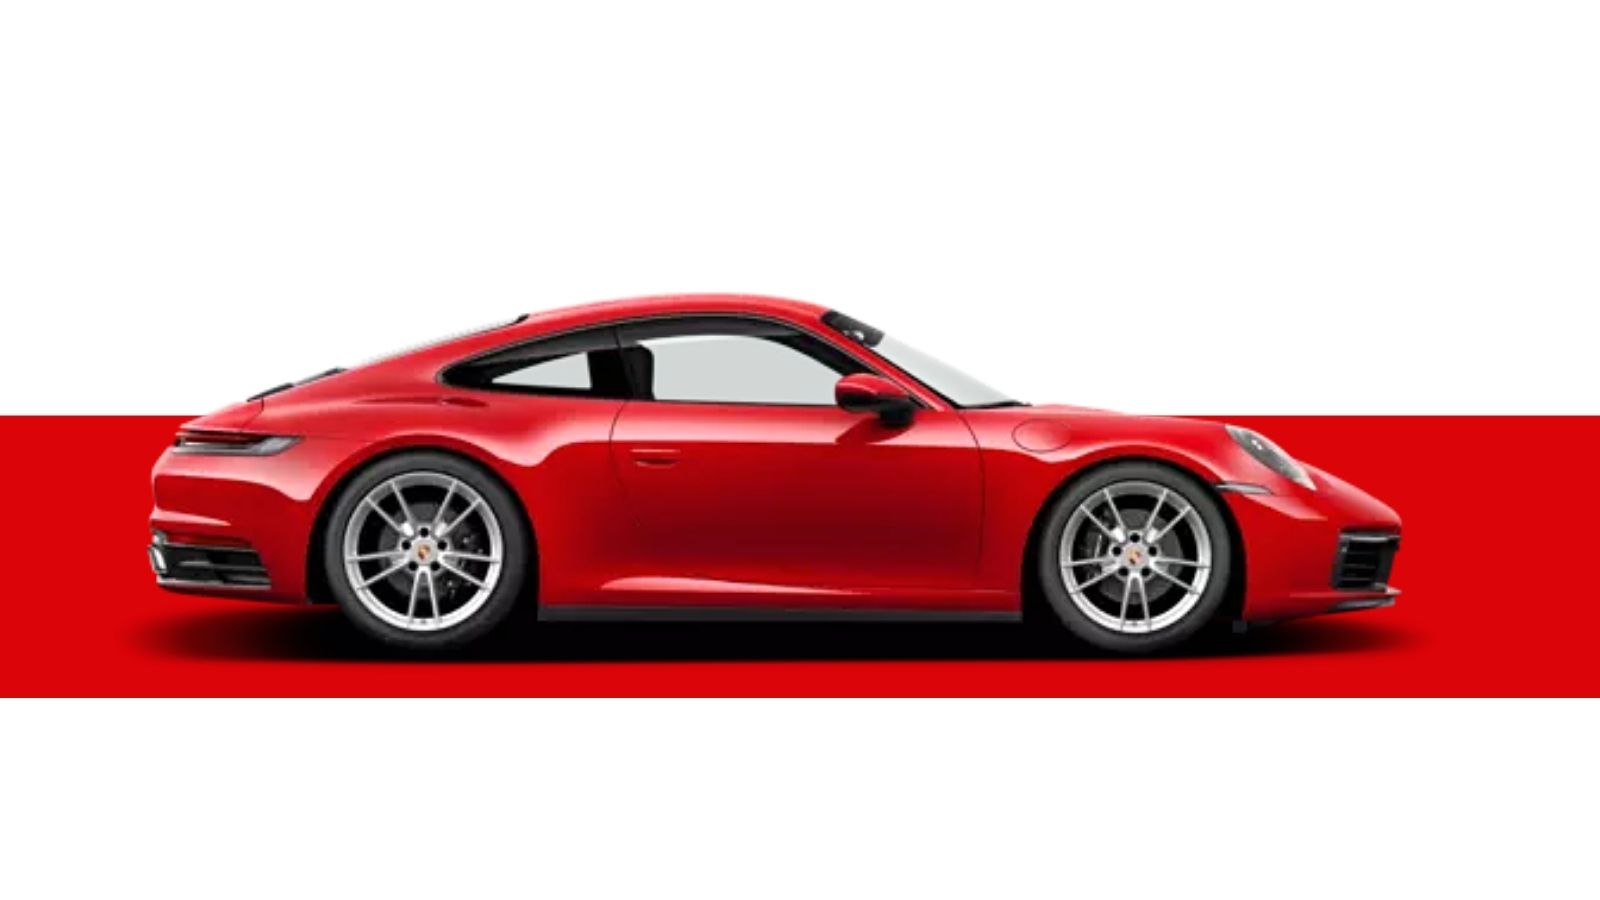 2021 Porsche 911 price in india